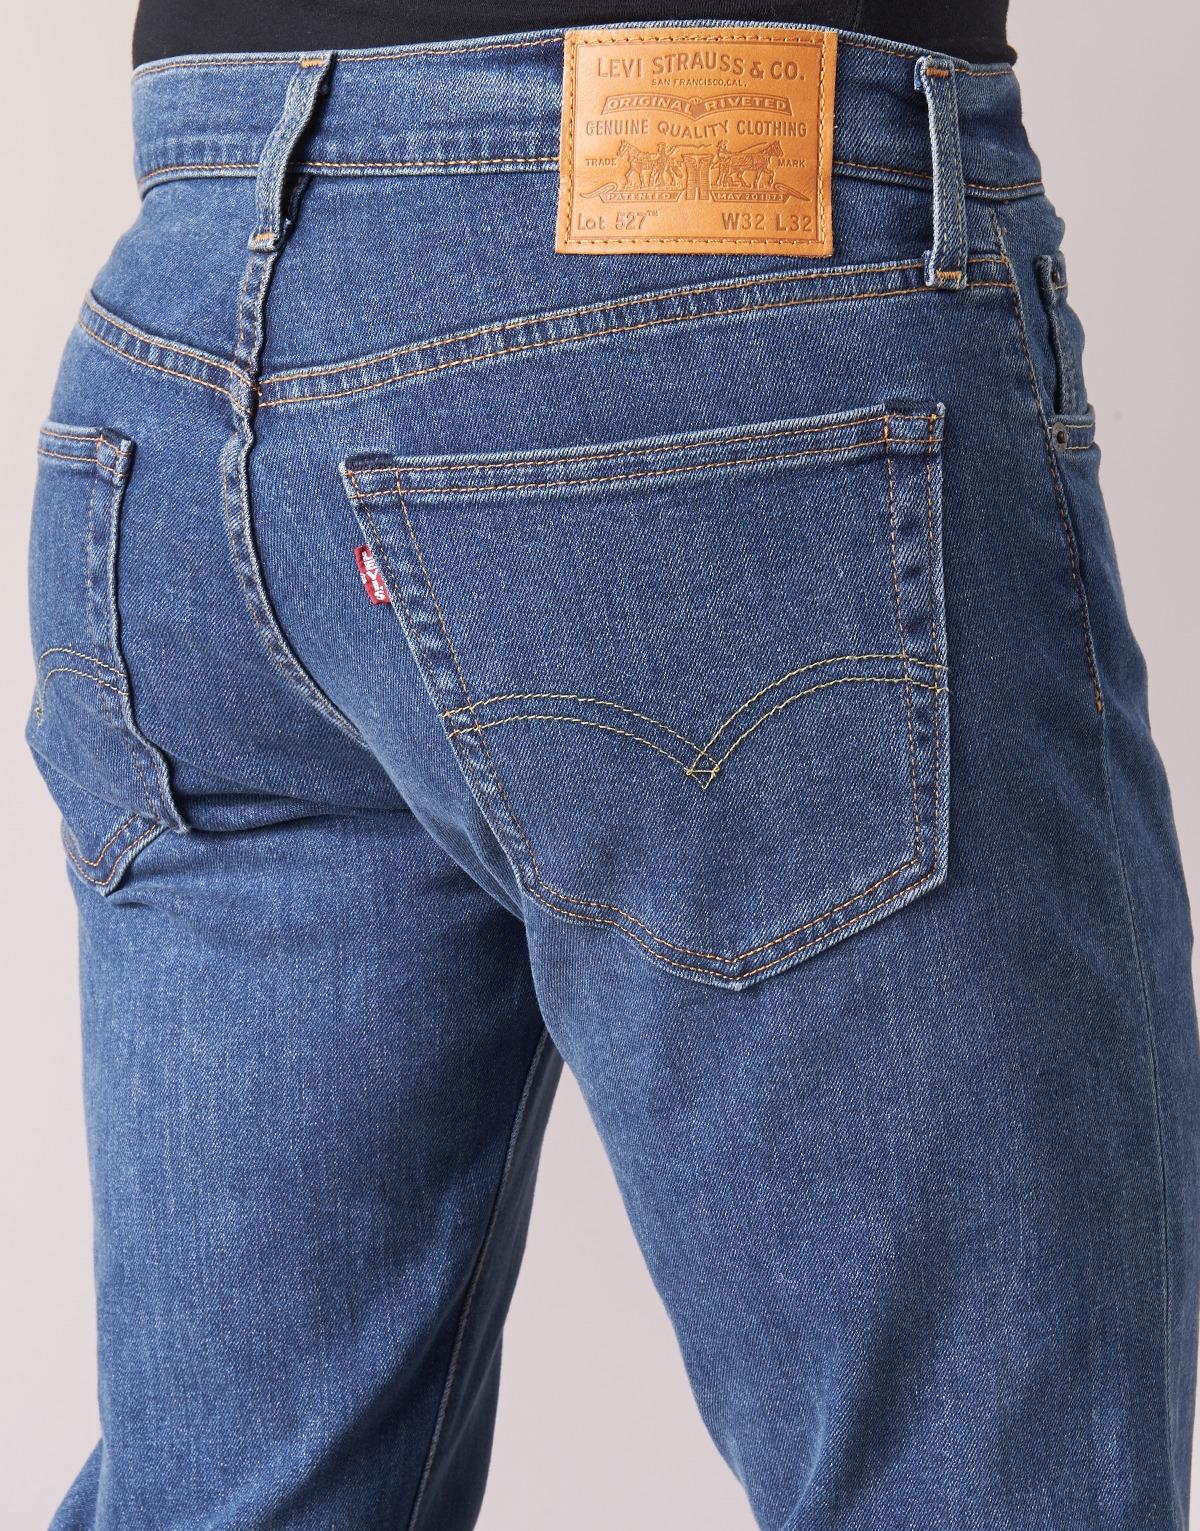 Levi's Denim 527 Slim Boot Cut Bootcut Jeans in Blue for Men - Lyst